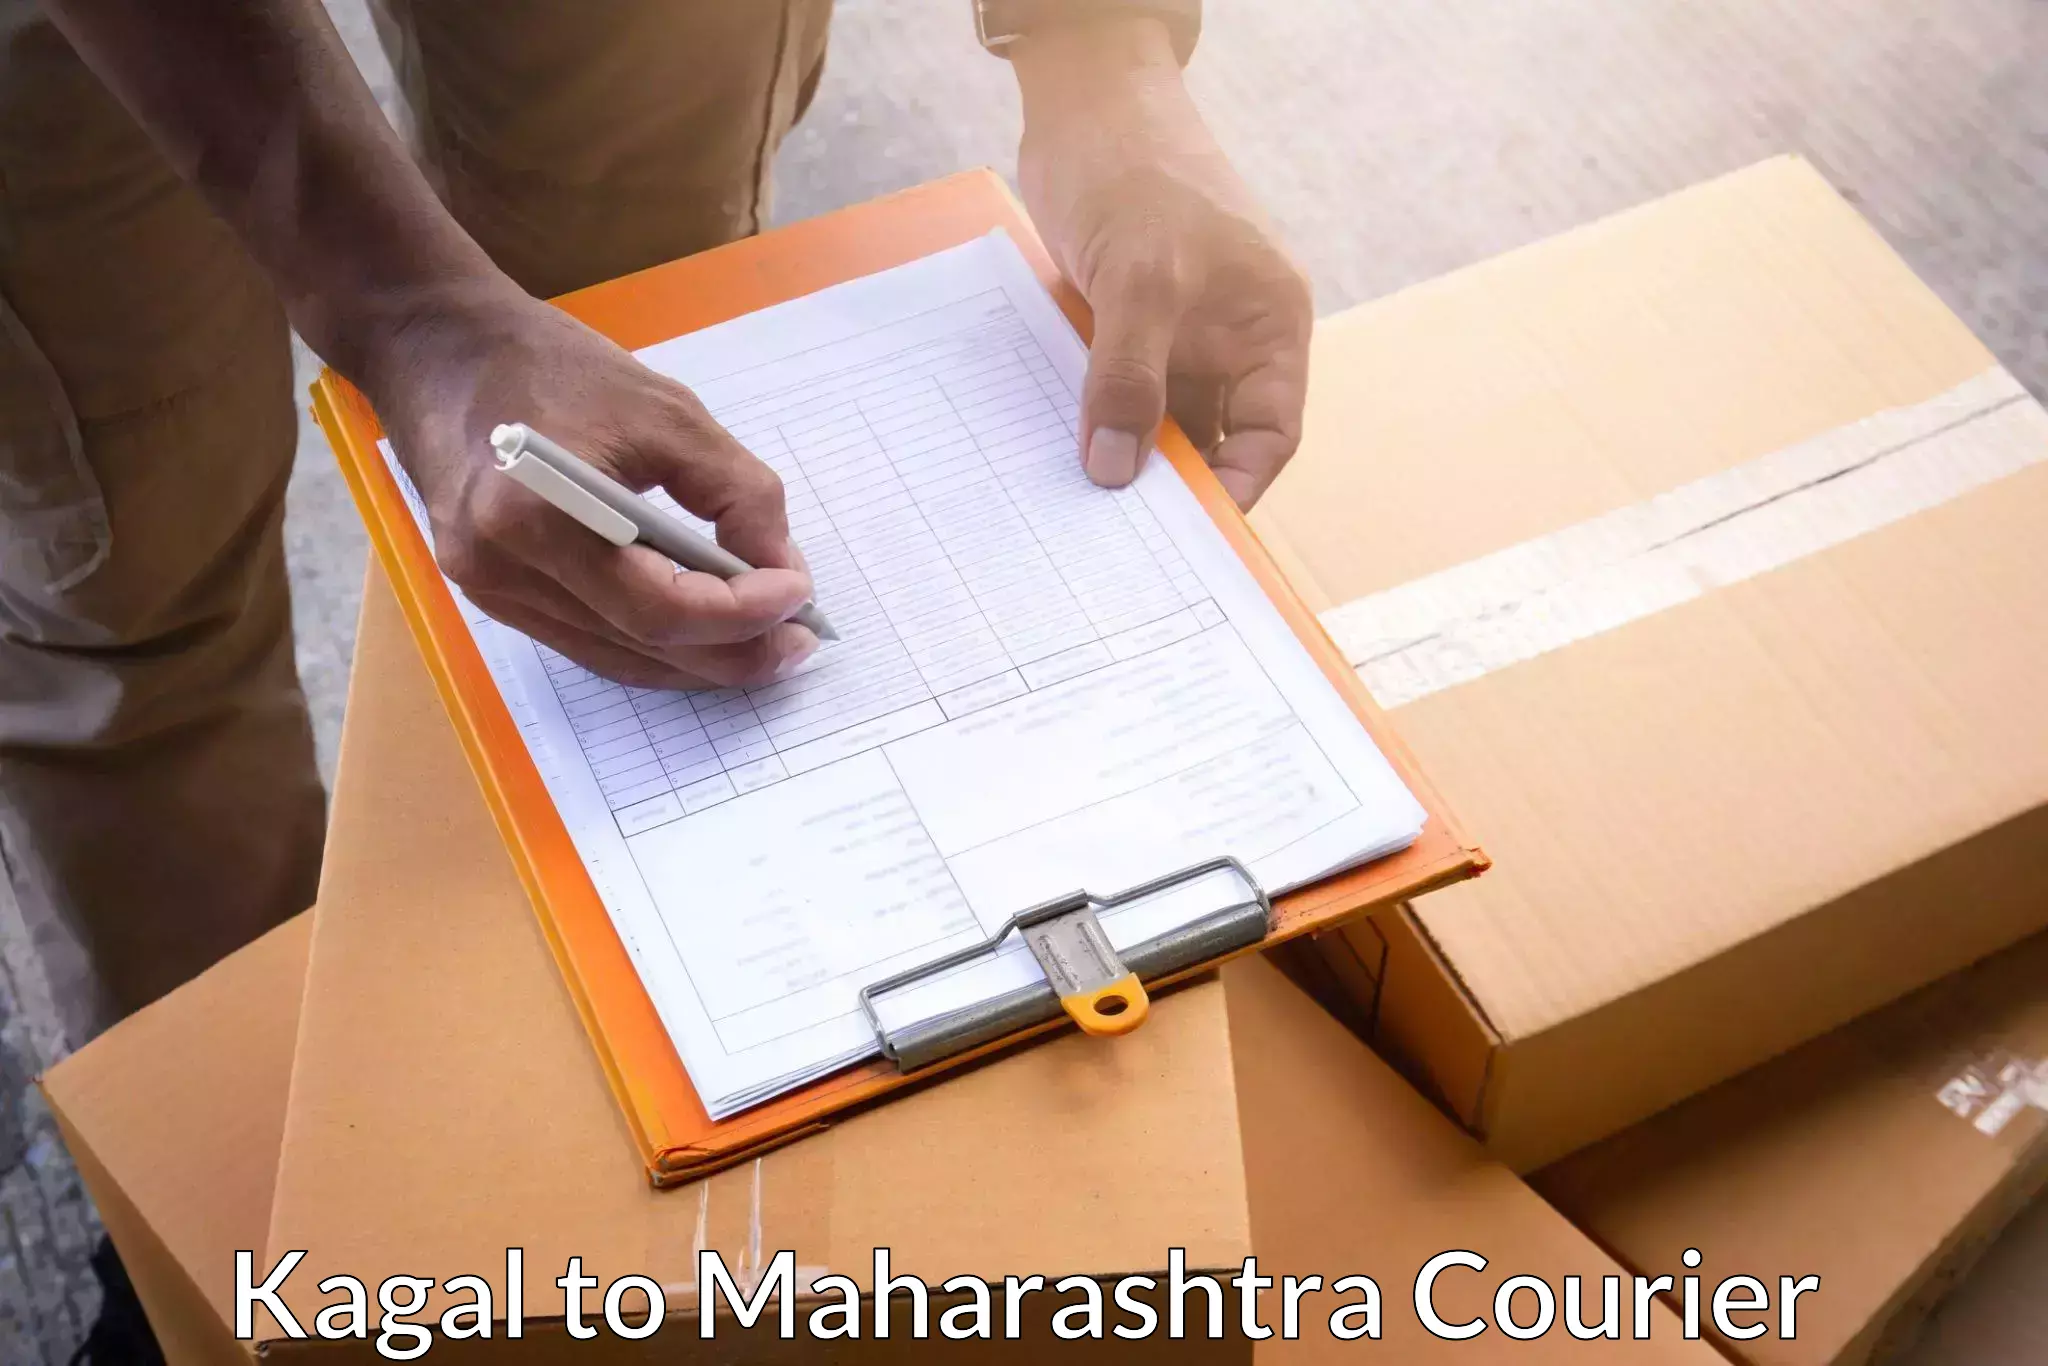 High-speed parcel service Kagal to Mahabaleshwar